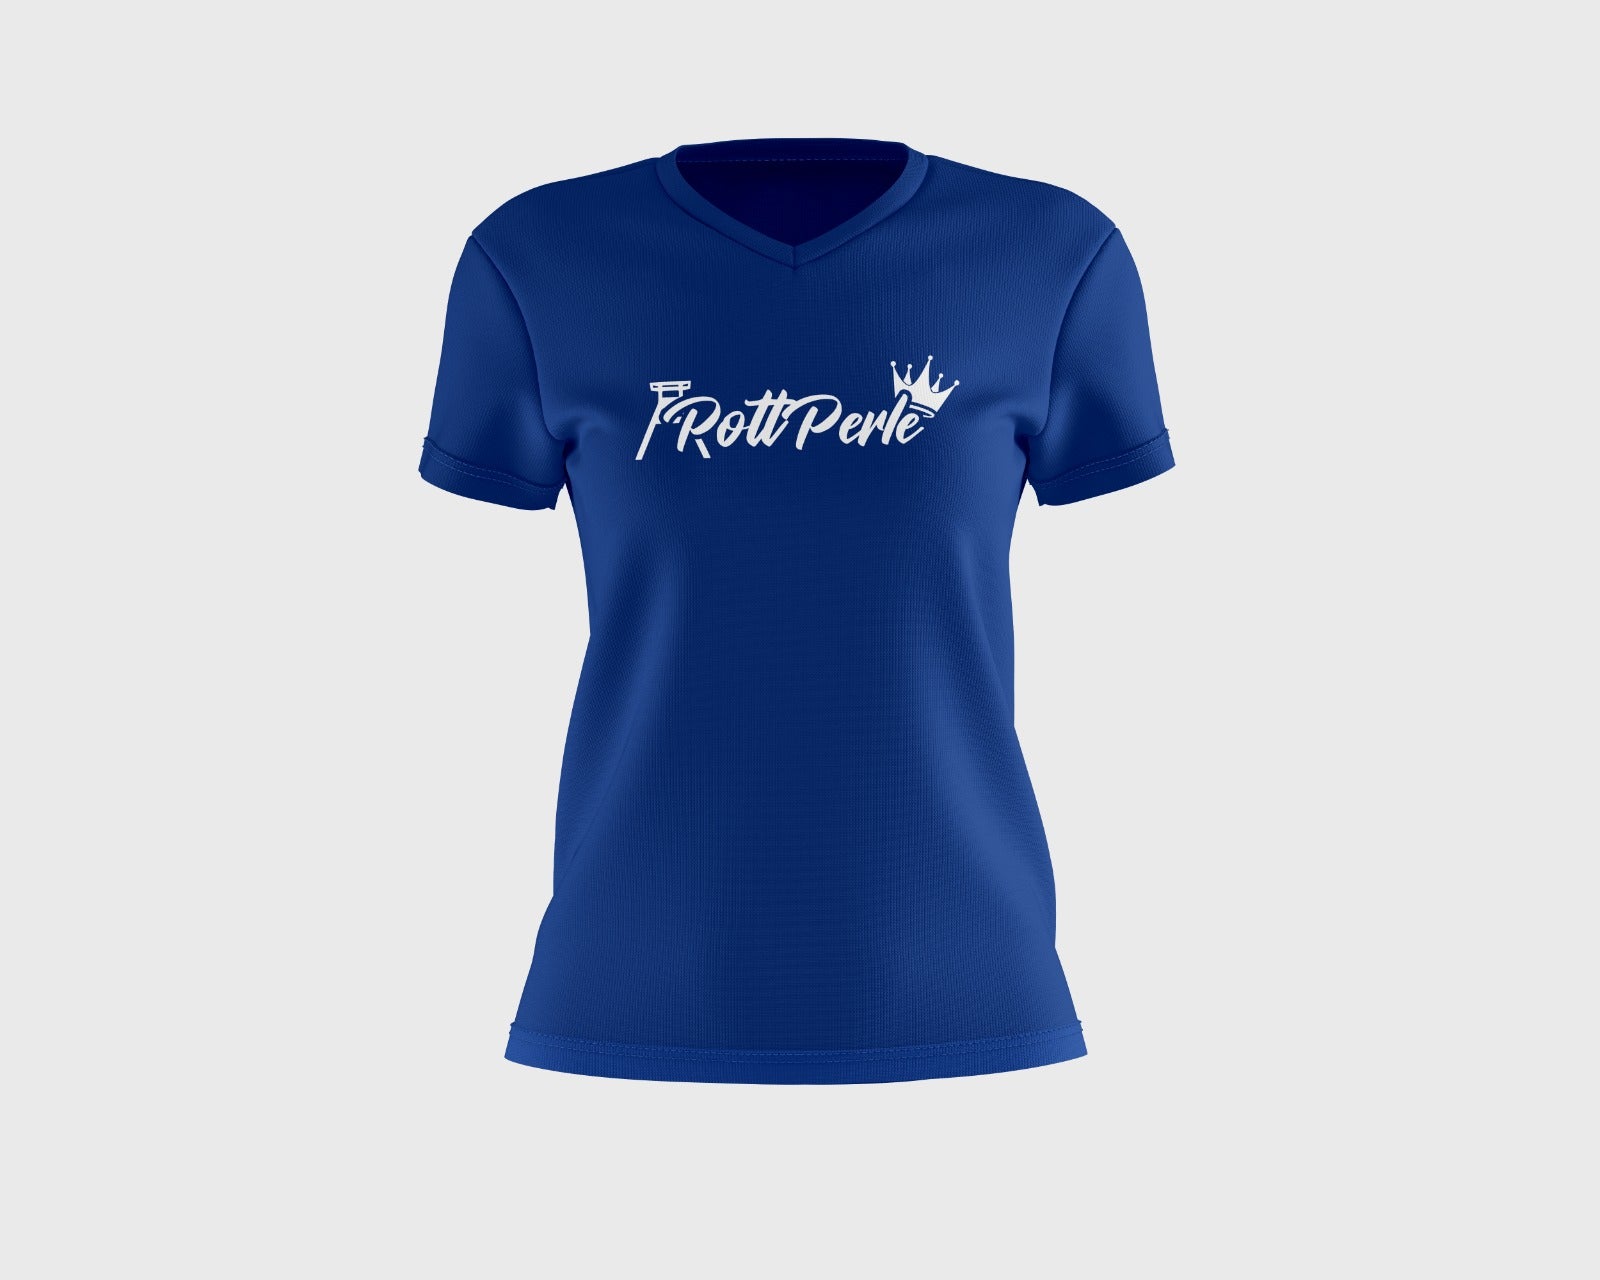 T-Shirt Frauen ,,Pott-Perle''